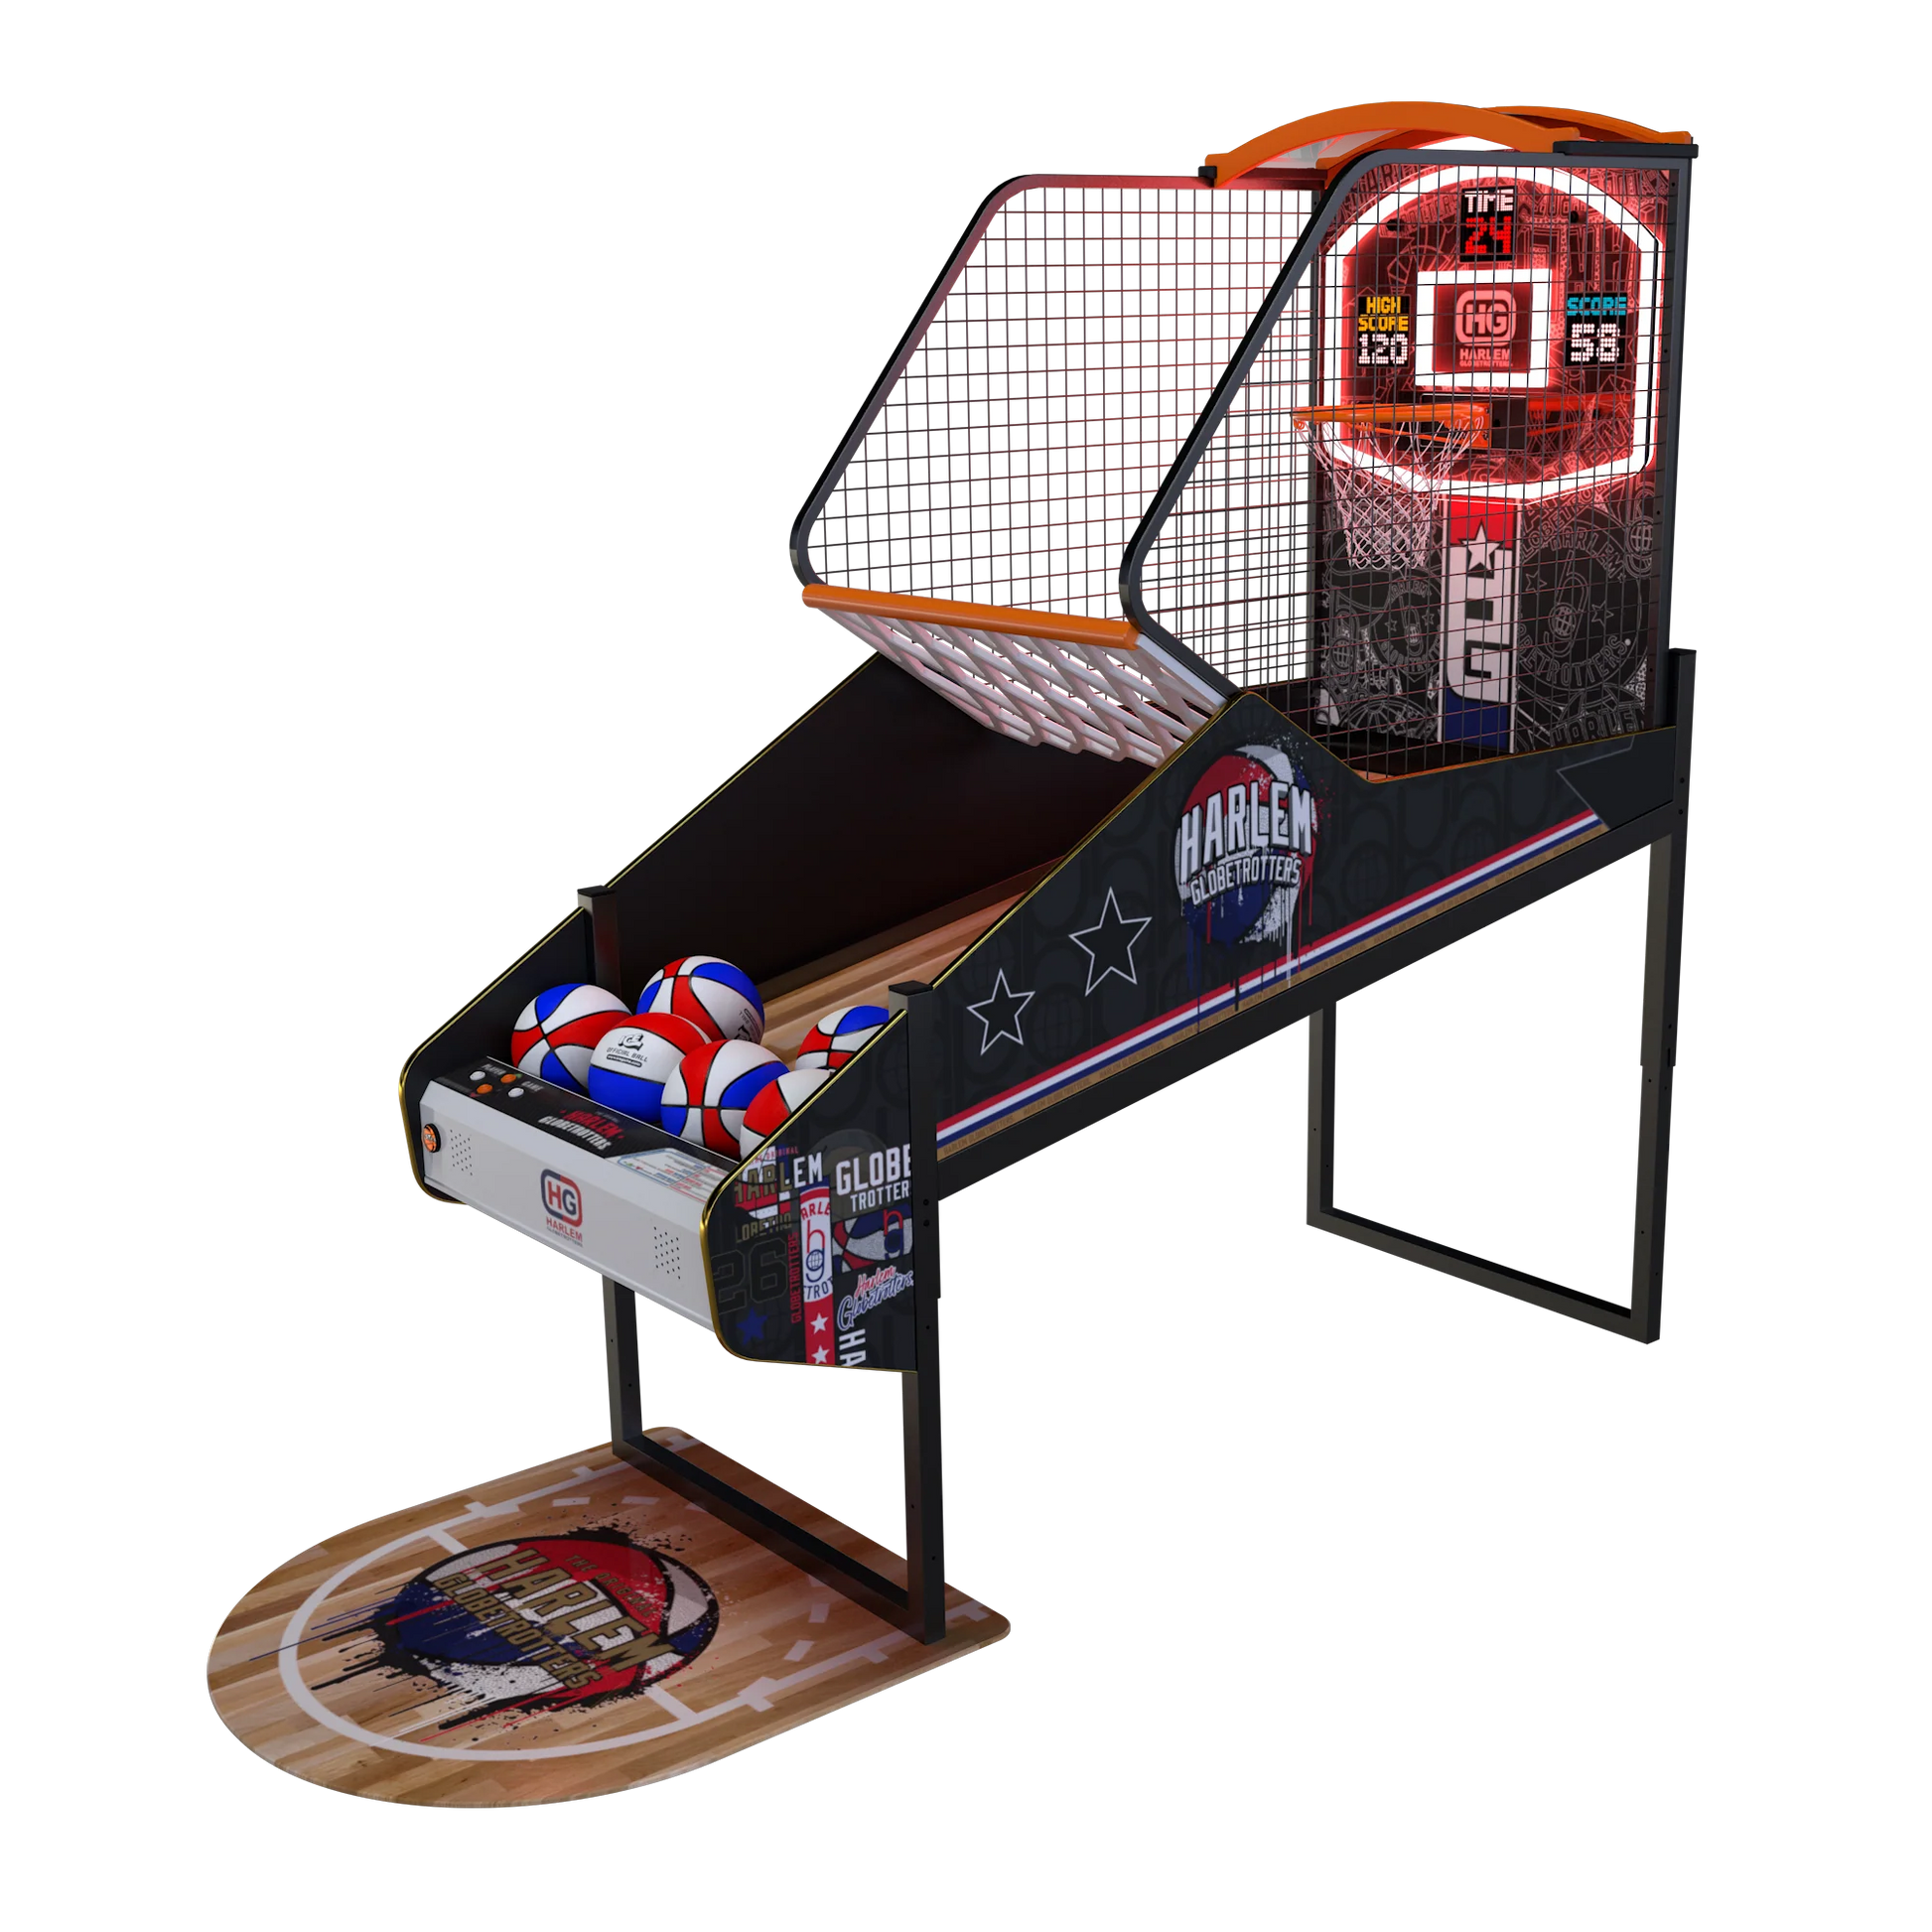 Harlem Globetrotters "MODERN" Scheme Basketball Arcade with Floor Mat - Prime Arcades Inc